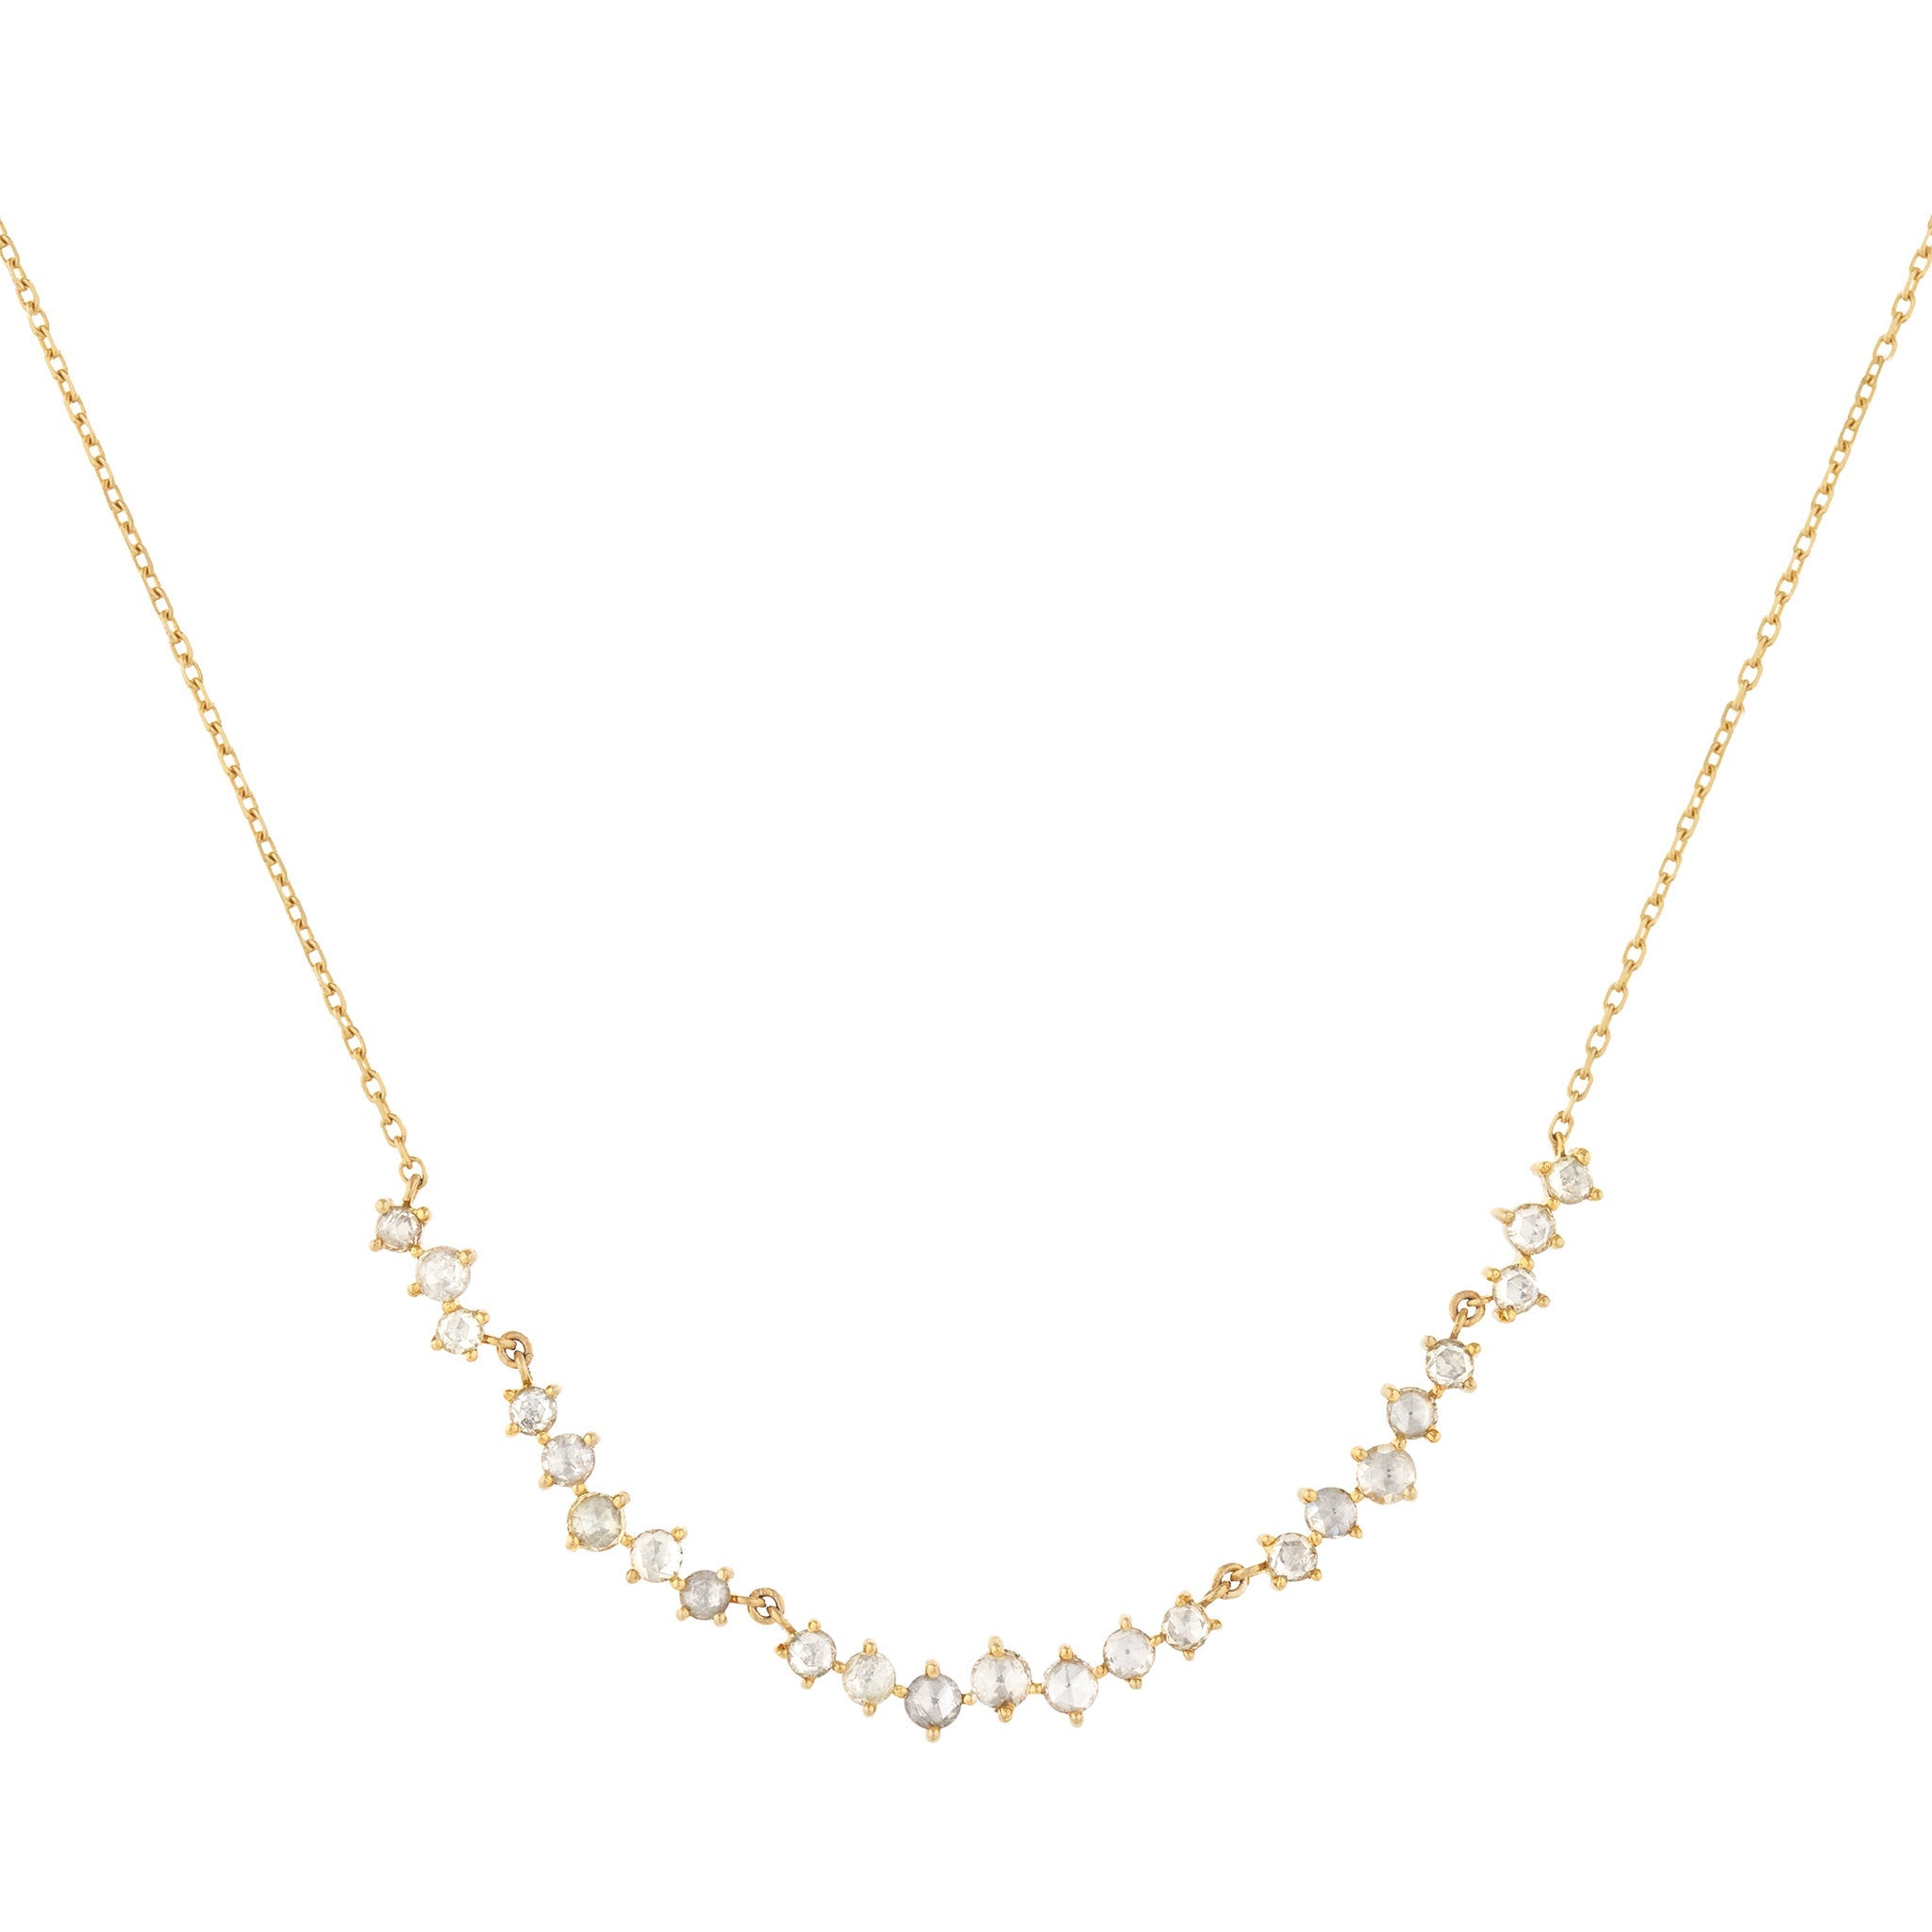 Rosecut Diamond Necklace Featuring 23 Rosecut Diamonds Set in Gradation in 14 Karat Yellow Gold - Peridot Fine Jewelry - Celine Daoust